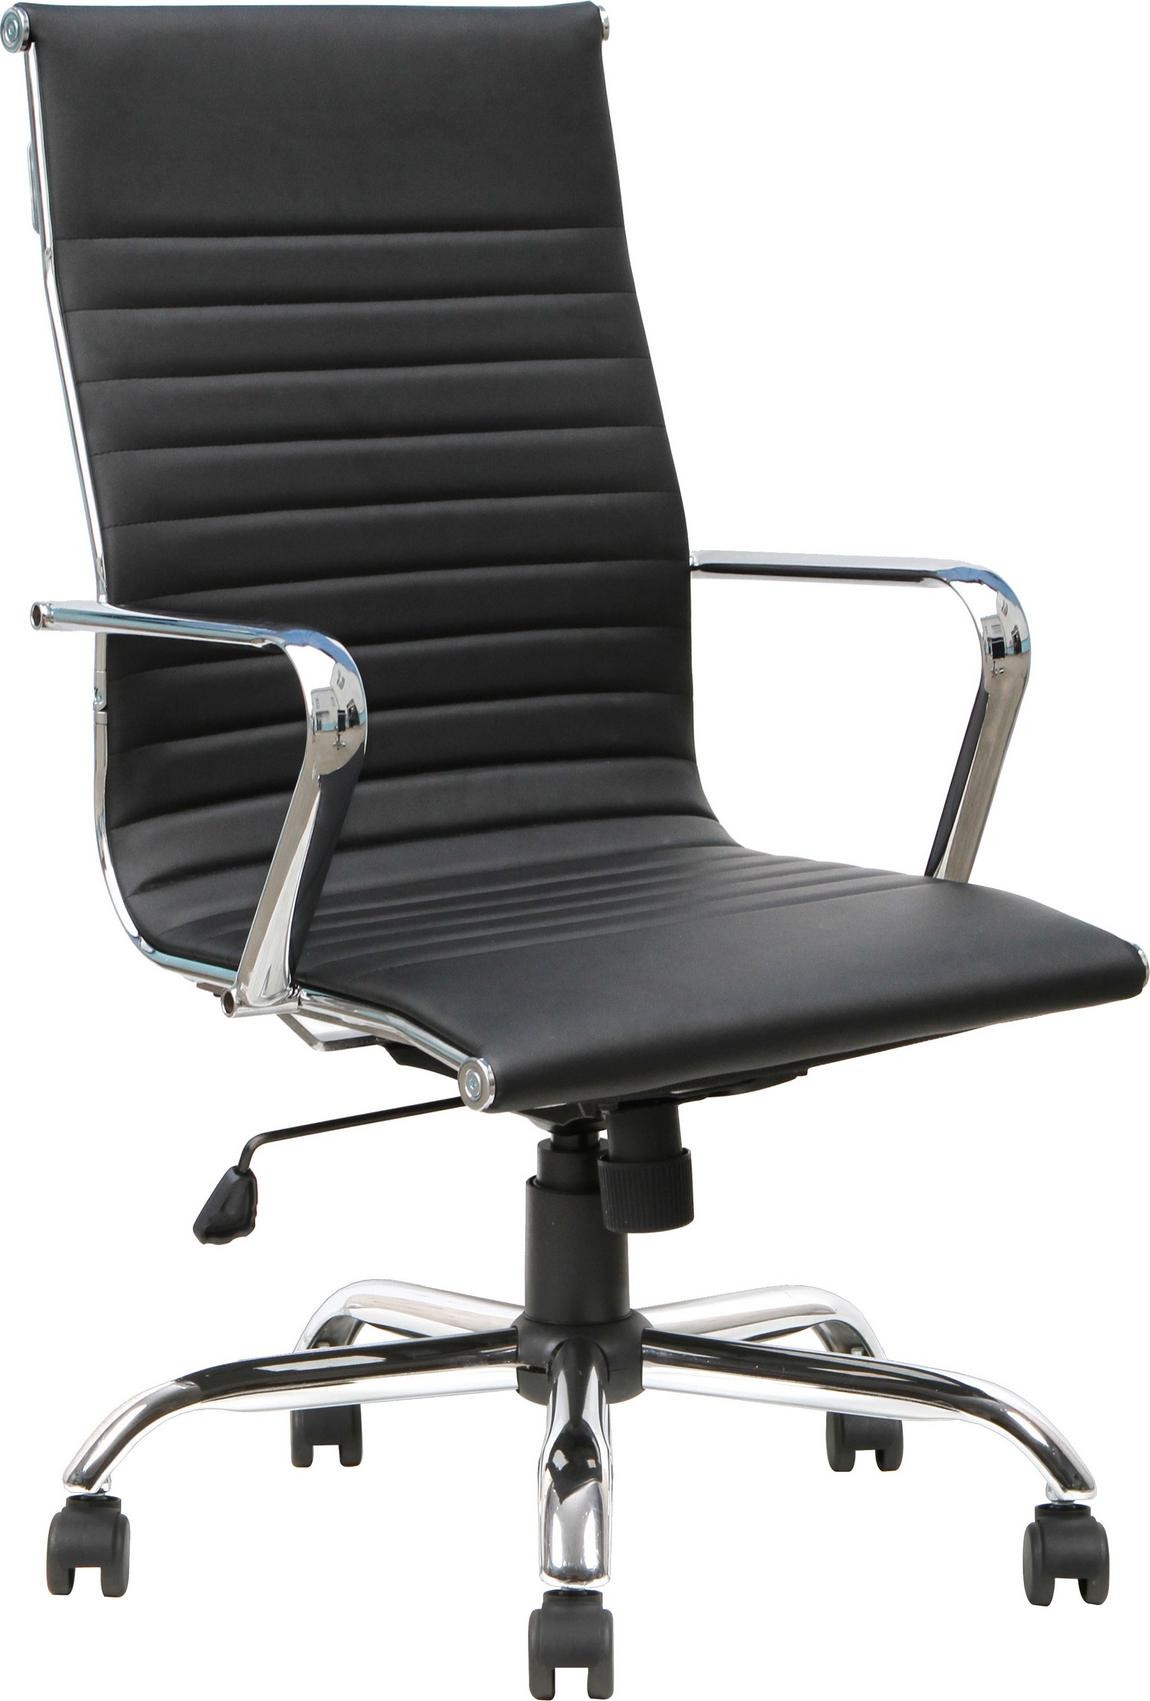 Black High Back Conference Room Chair | Madison Liquidators